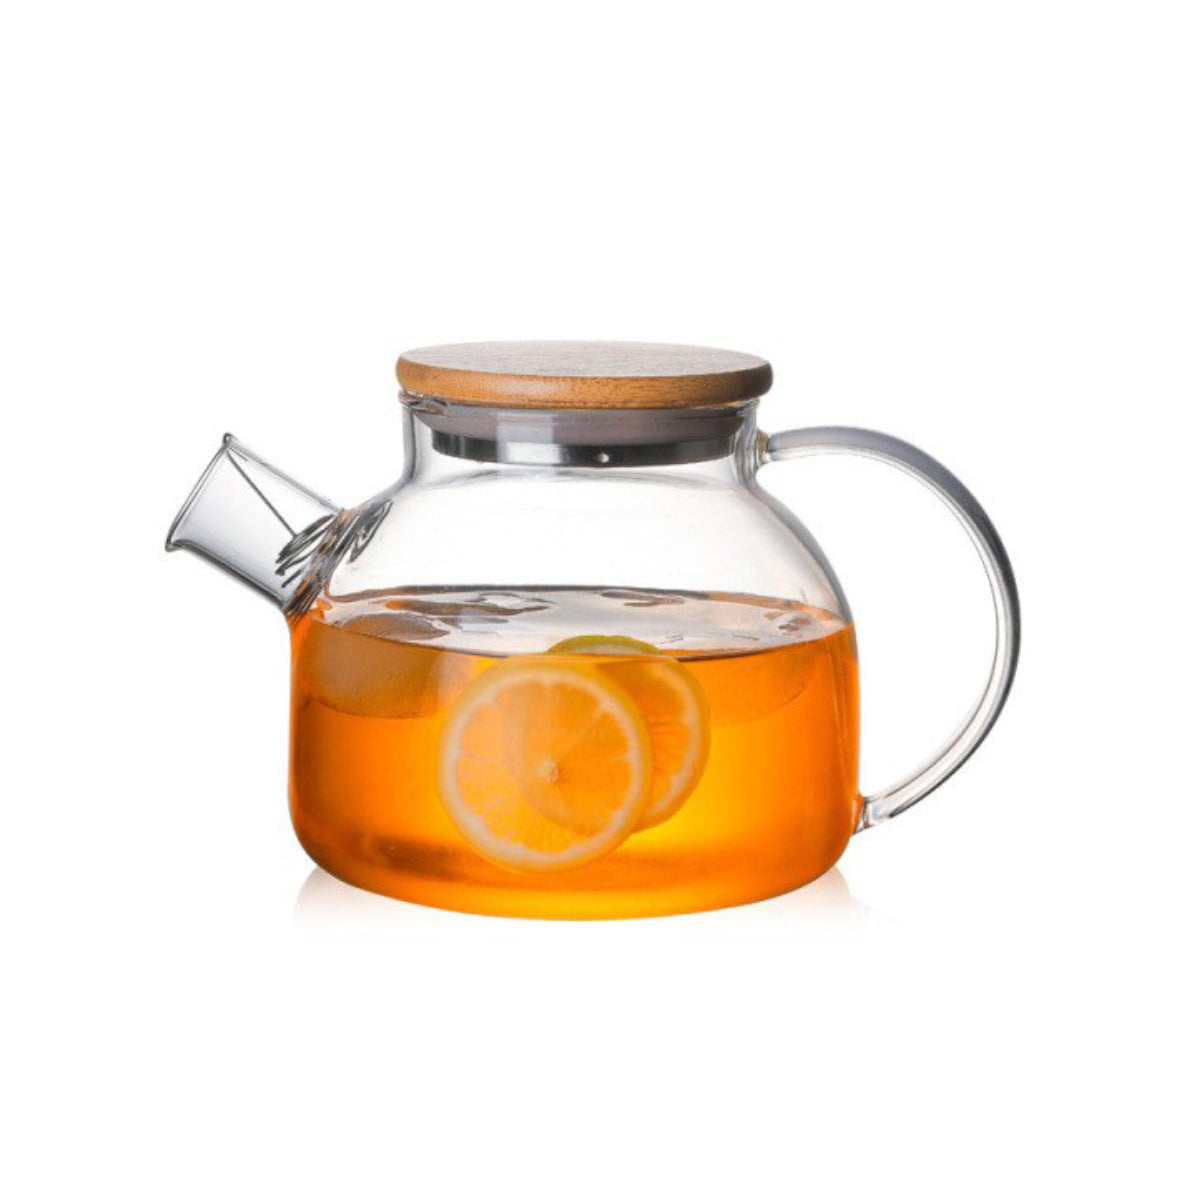 Borosilicate Classic Glass Teapot